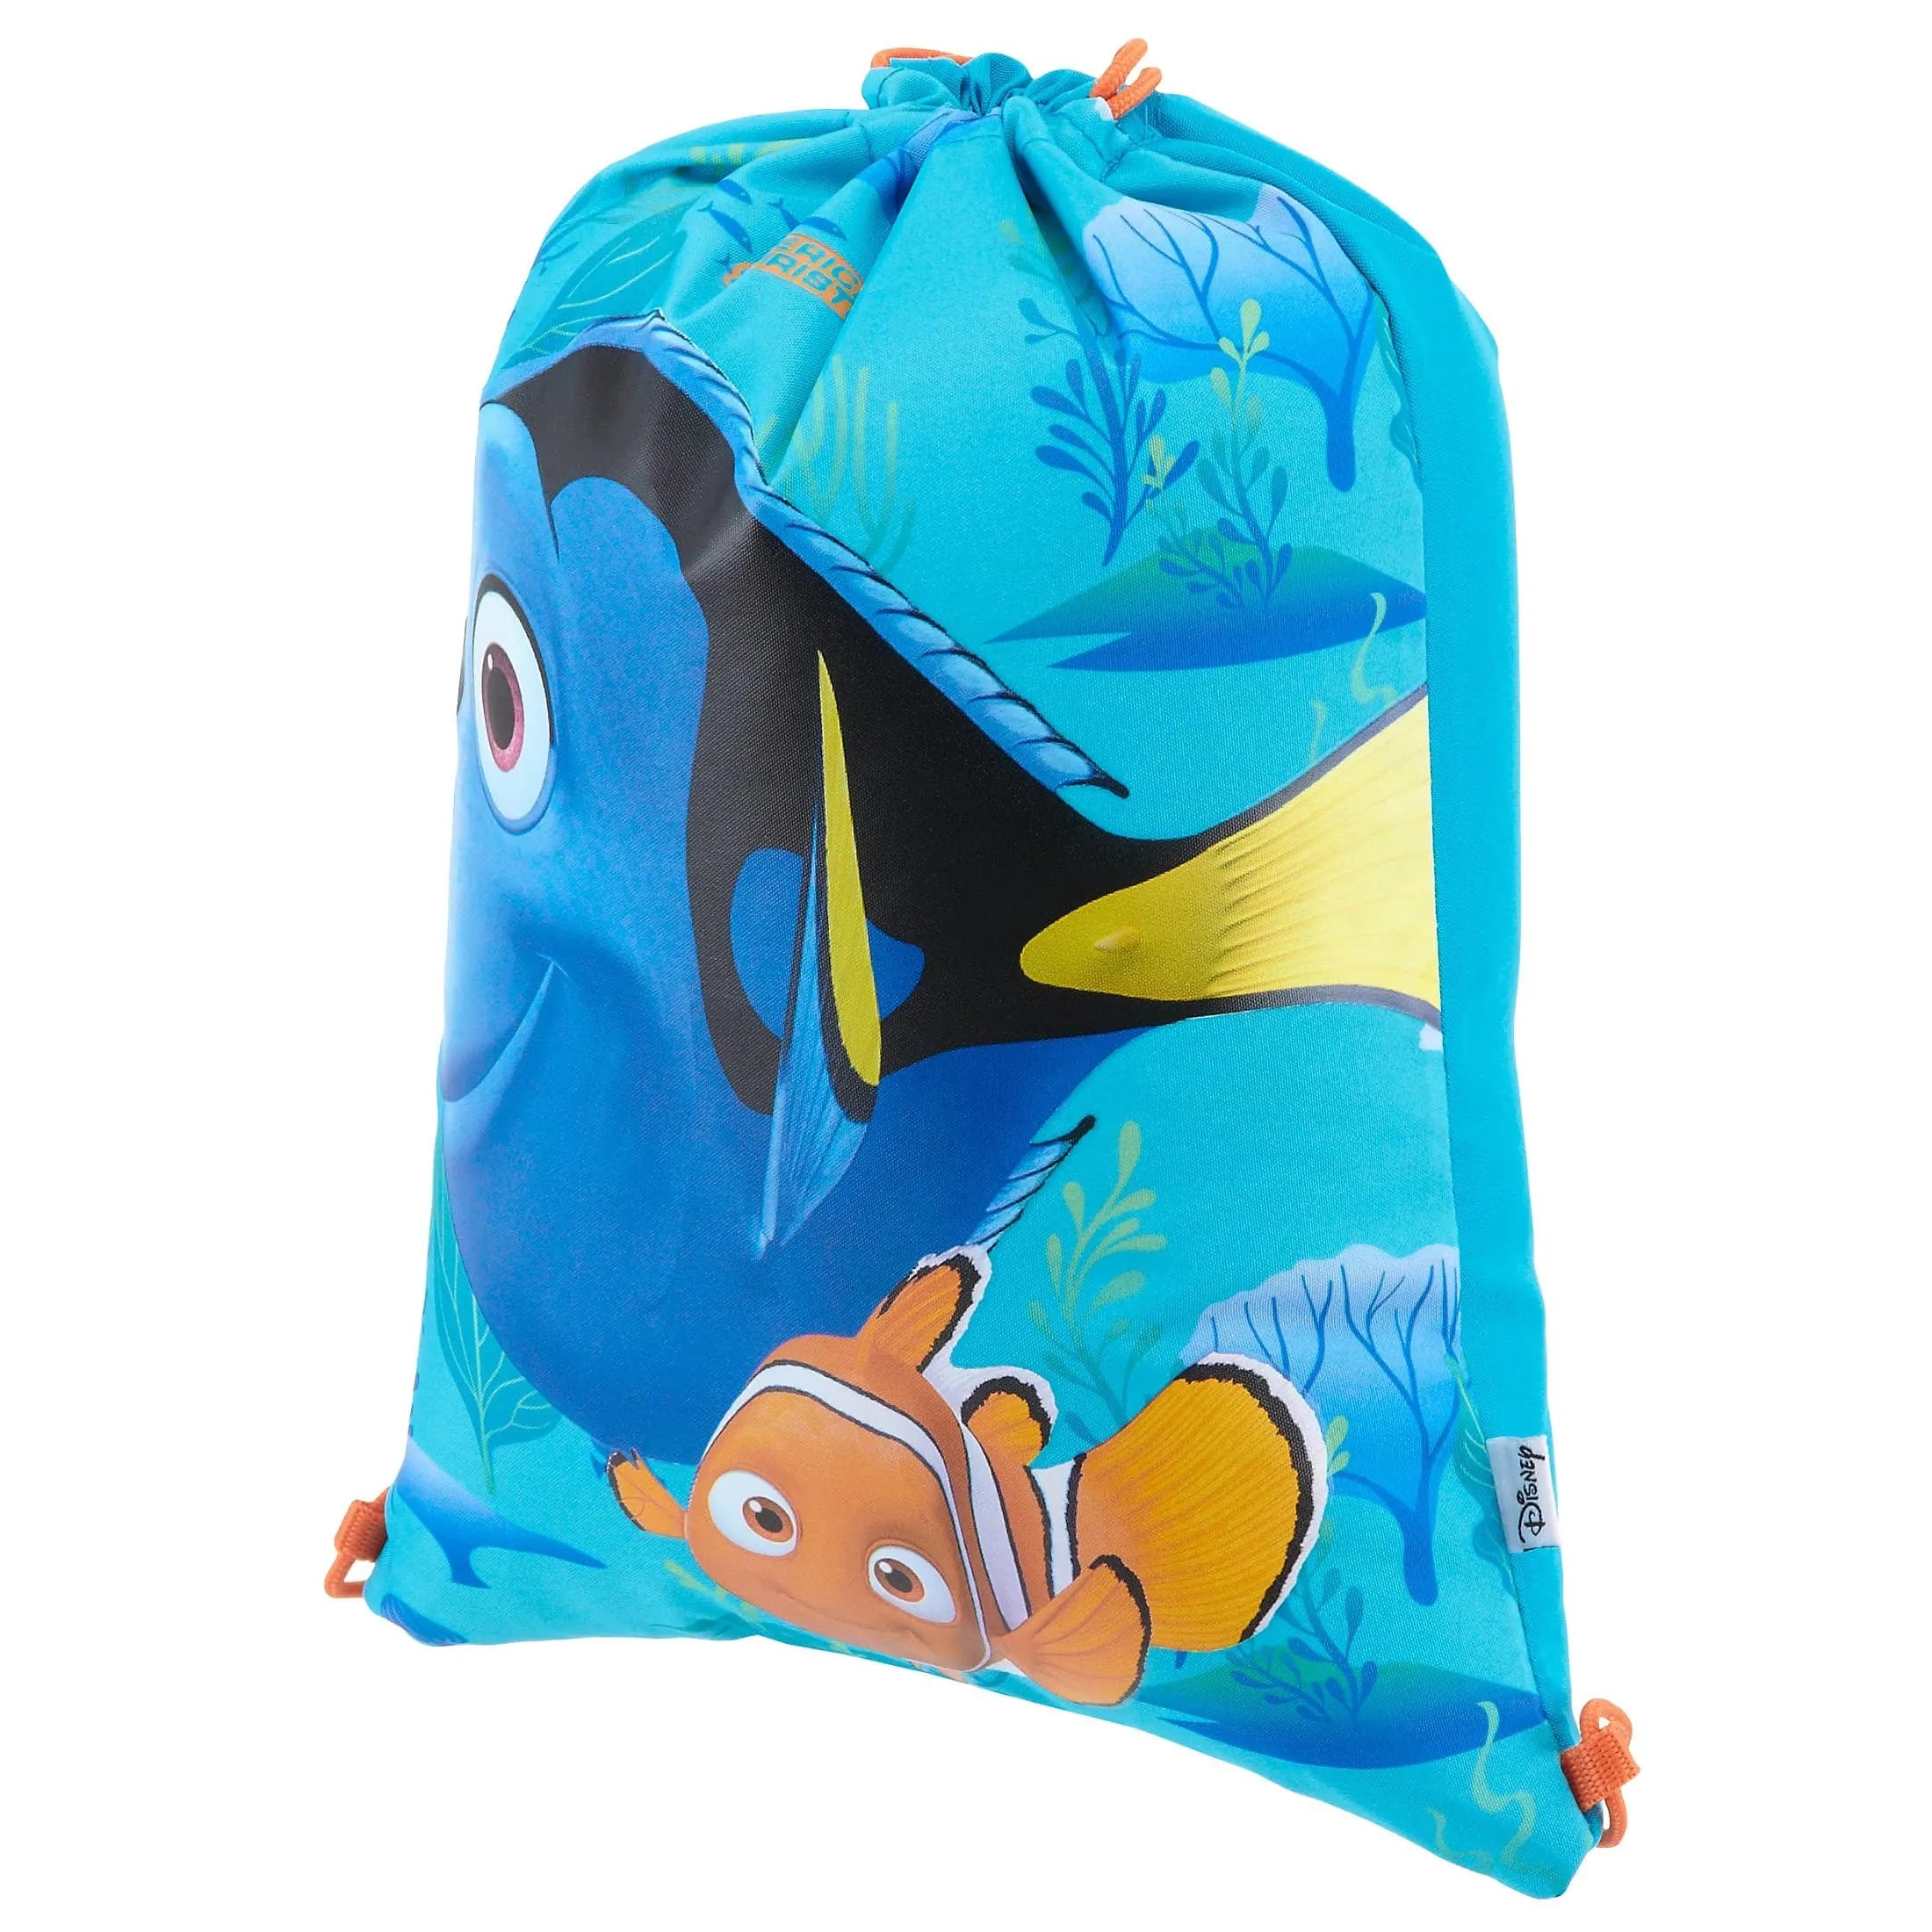 American Tourister Disney New Wonder sports bag 36 cm - dory-nemo fintastic